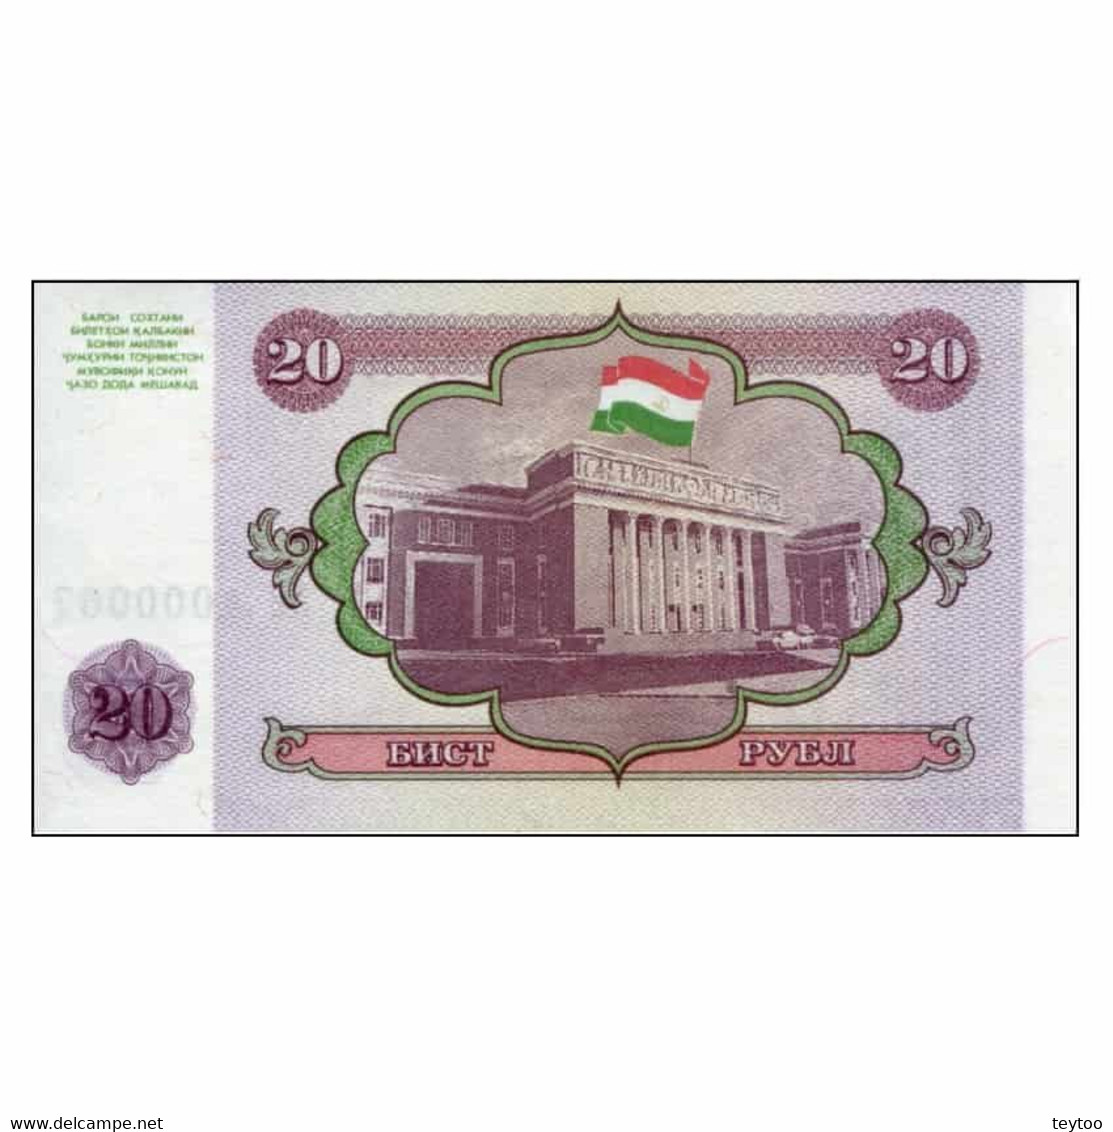 C1796# Tayikistán 1994, 20 Rublo (UNC) - P-4a - Tadjikistan